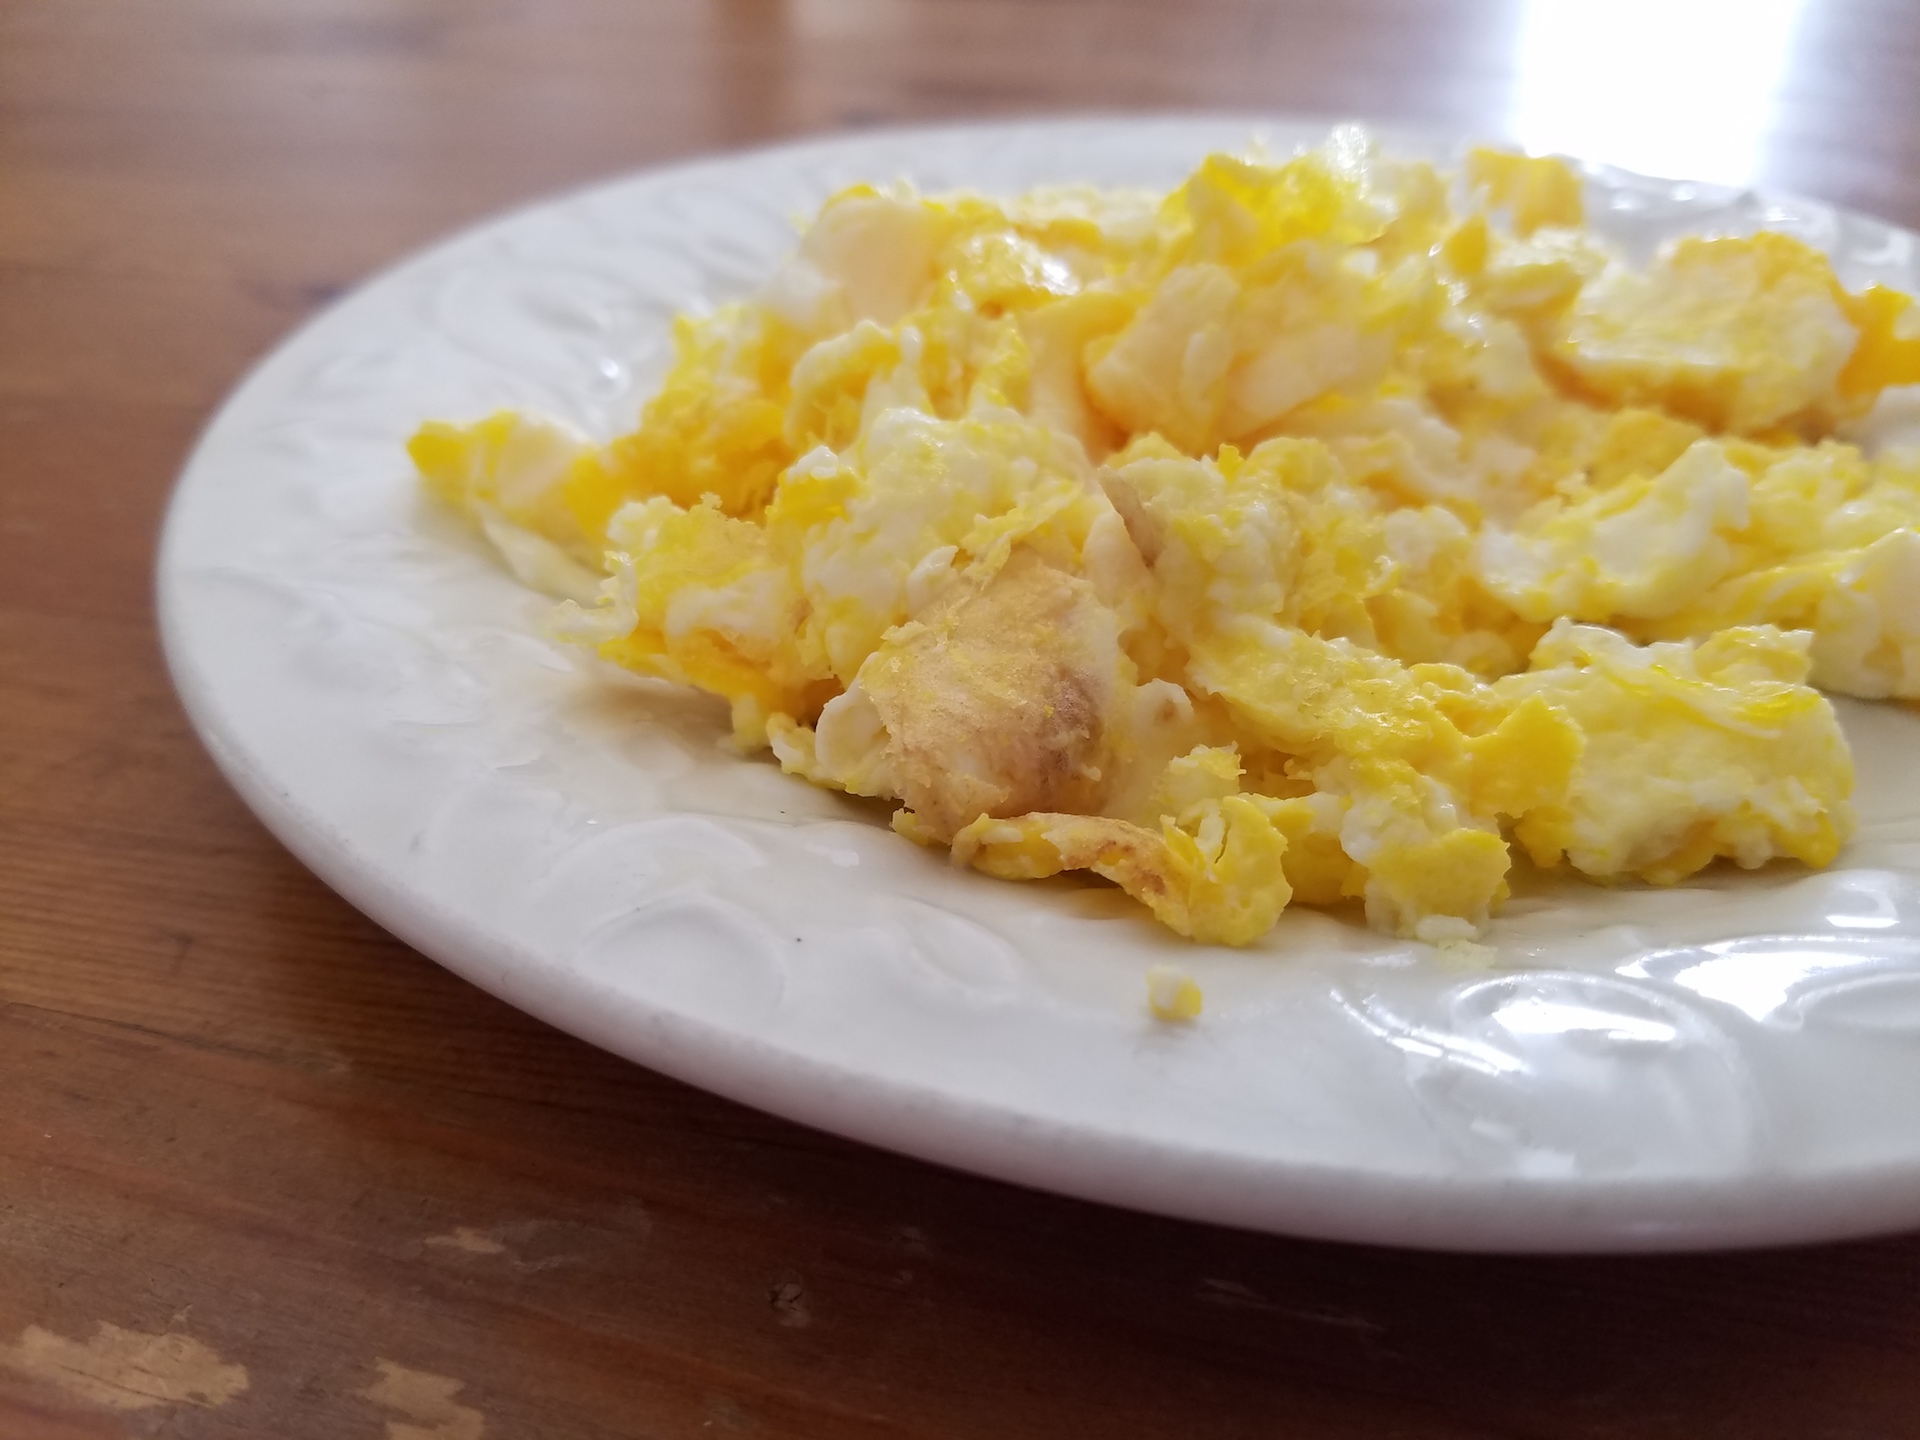 Rolling Oaks' eggs scrambled